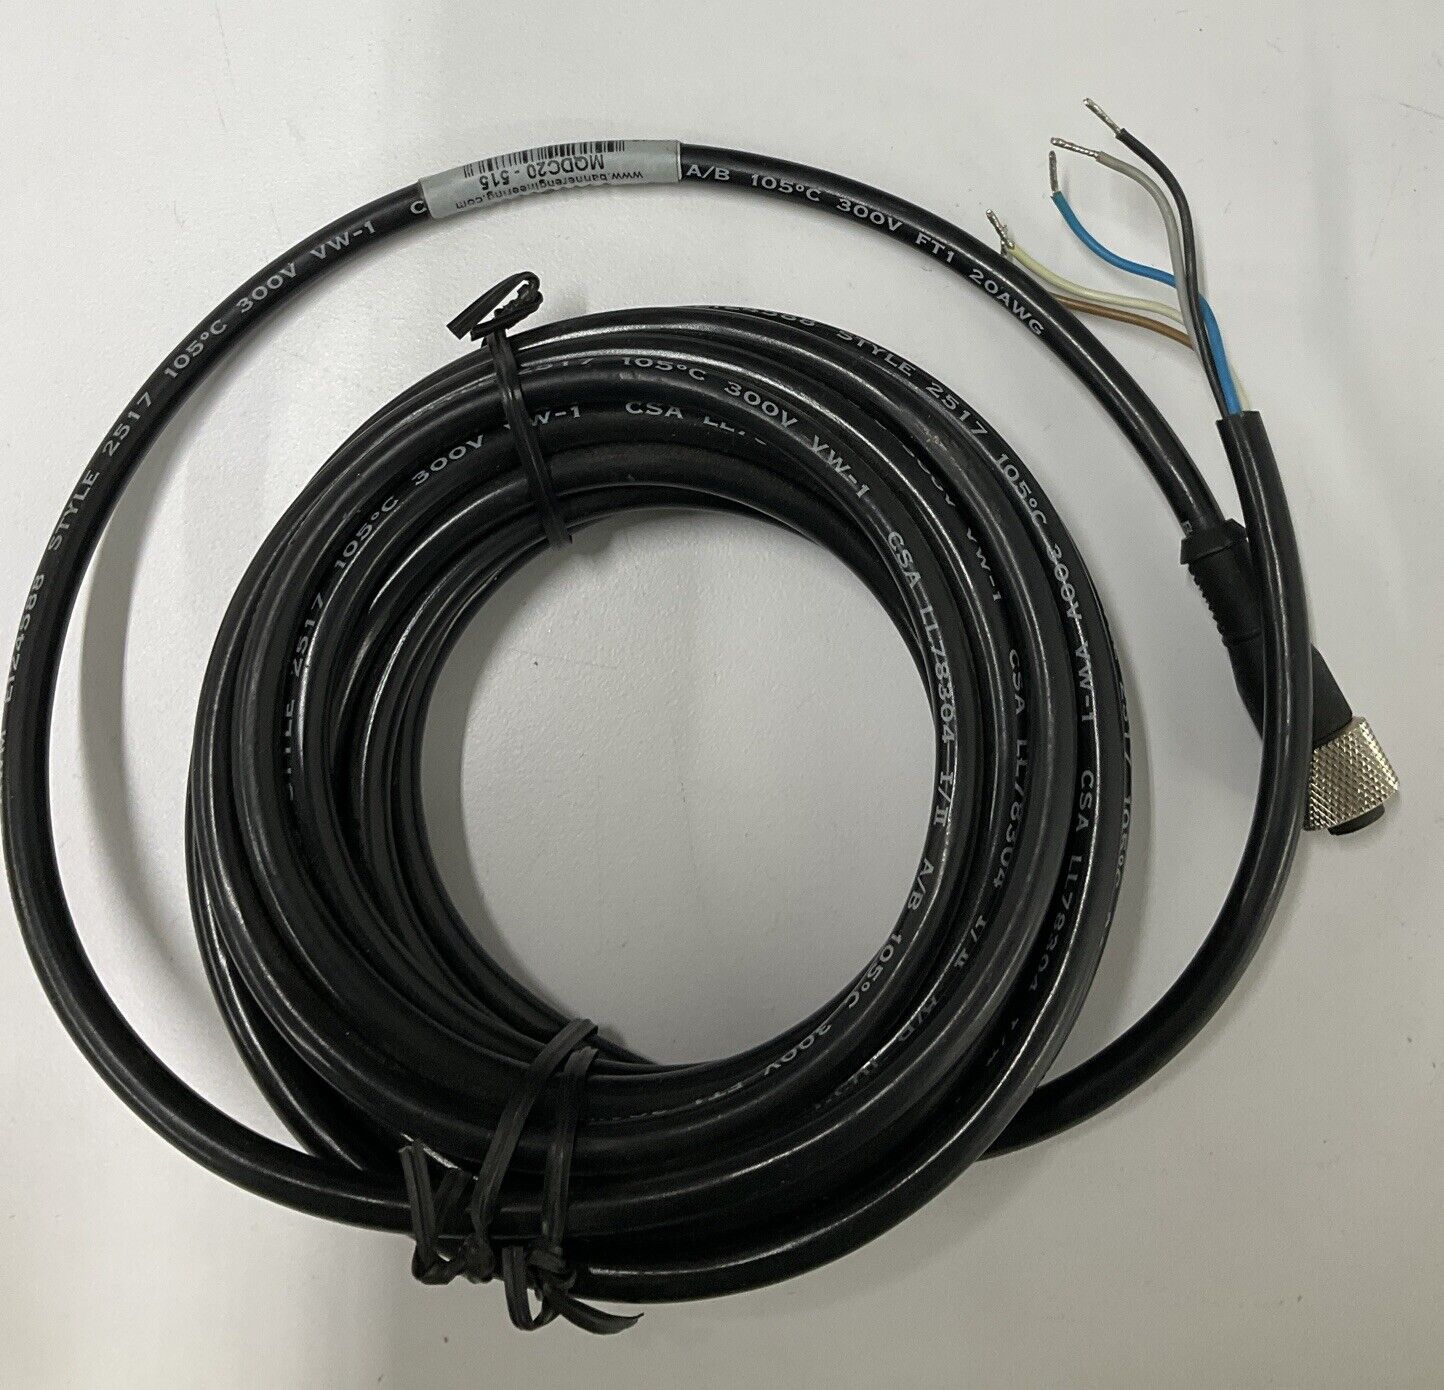 Banner Mqdc20-515  79870 Sensor Cable 5P, Female (CBL120)